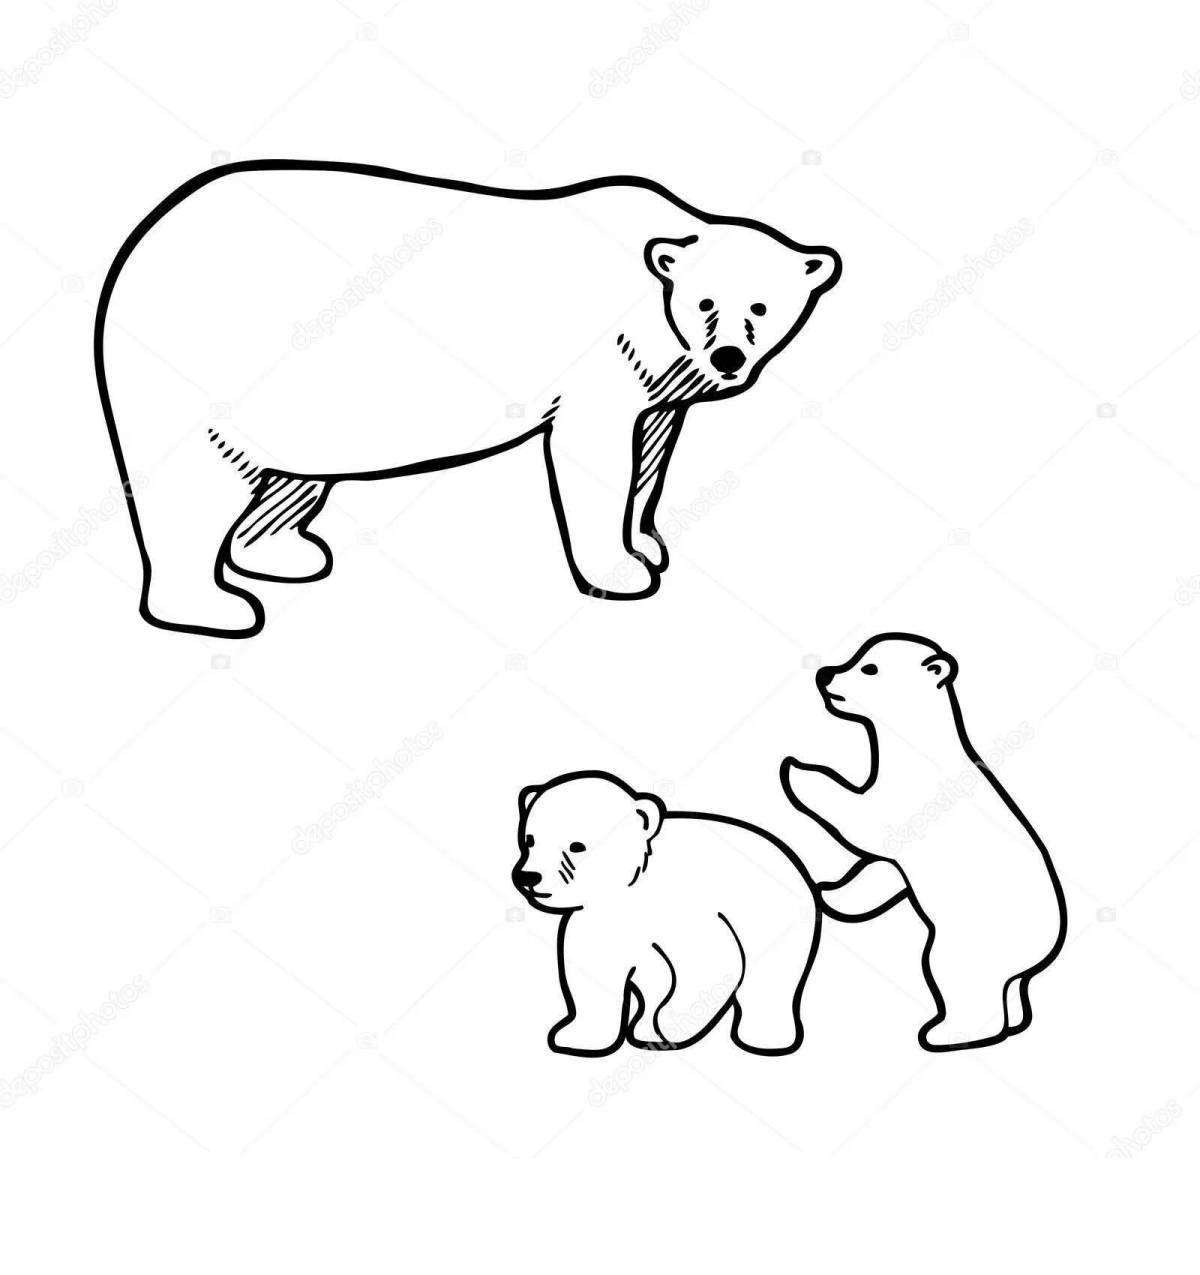 Coloring book shining polar bear with cub